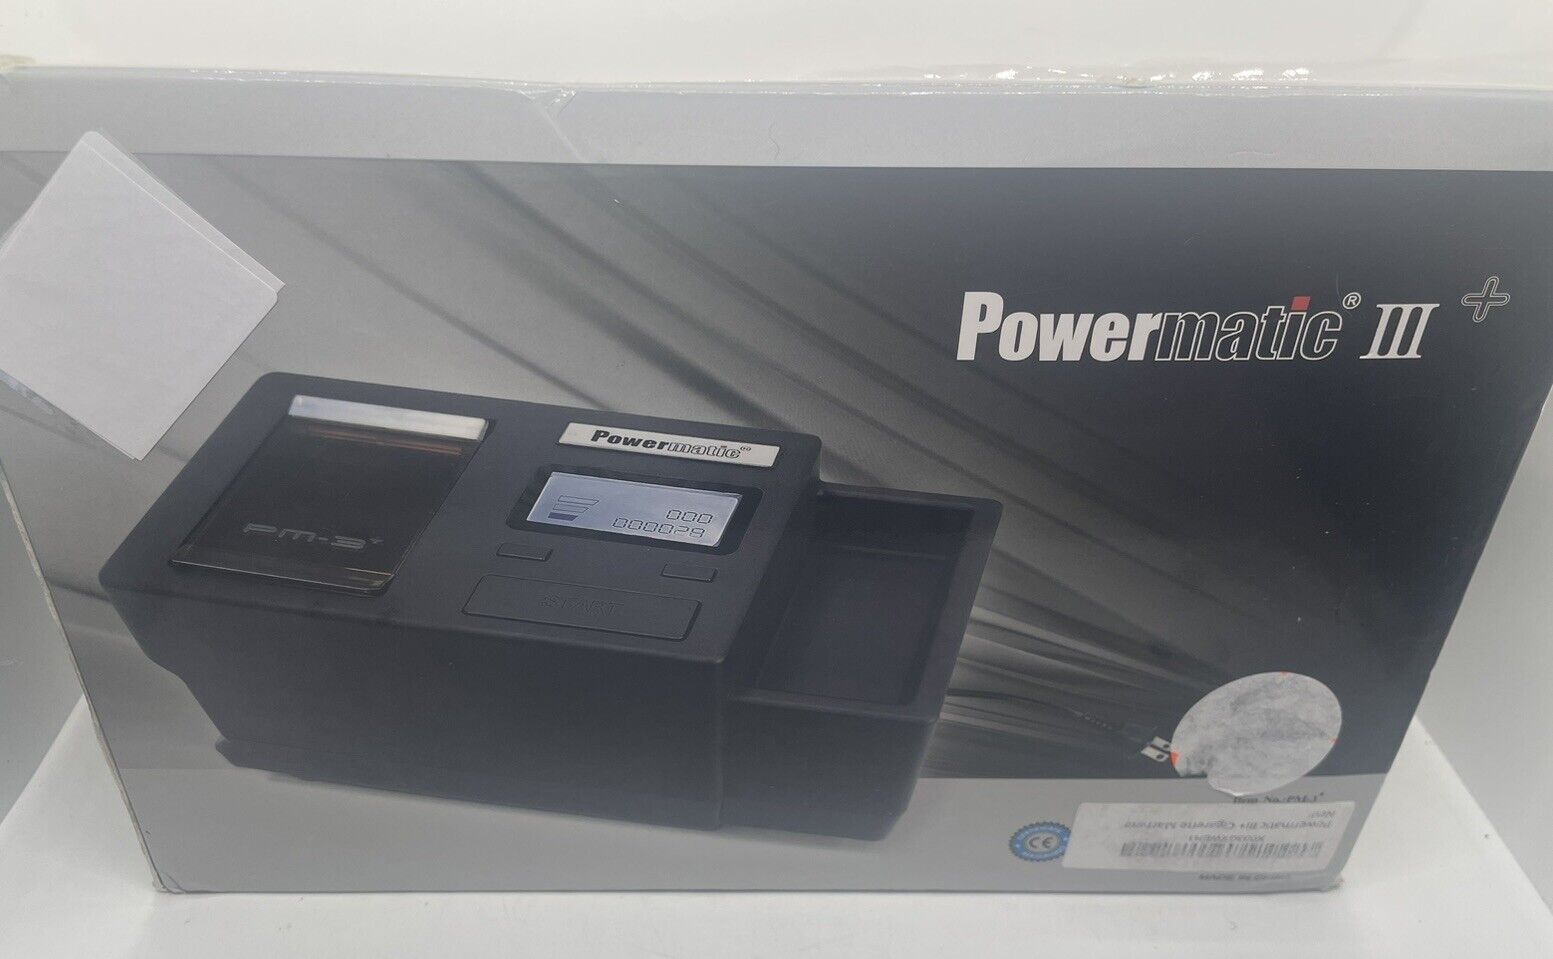 Powermatic III 3 Cigarette Rolling Machine w/ Digital Counter PM-3 *NEW* OpenBox